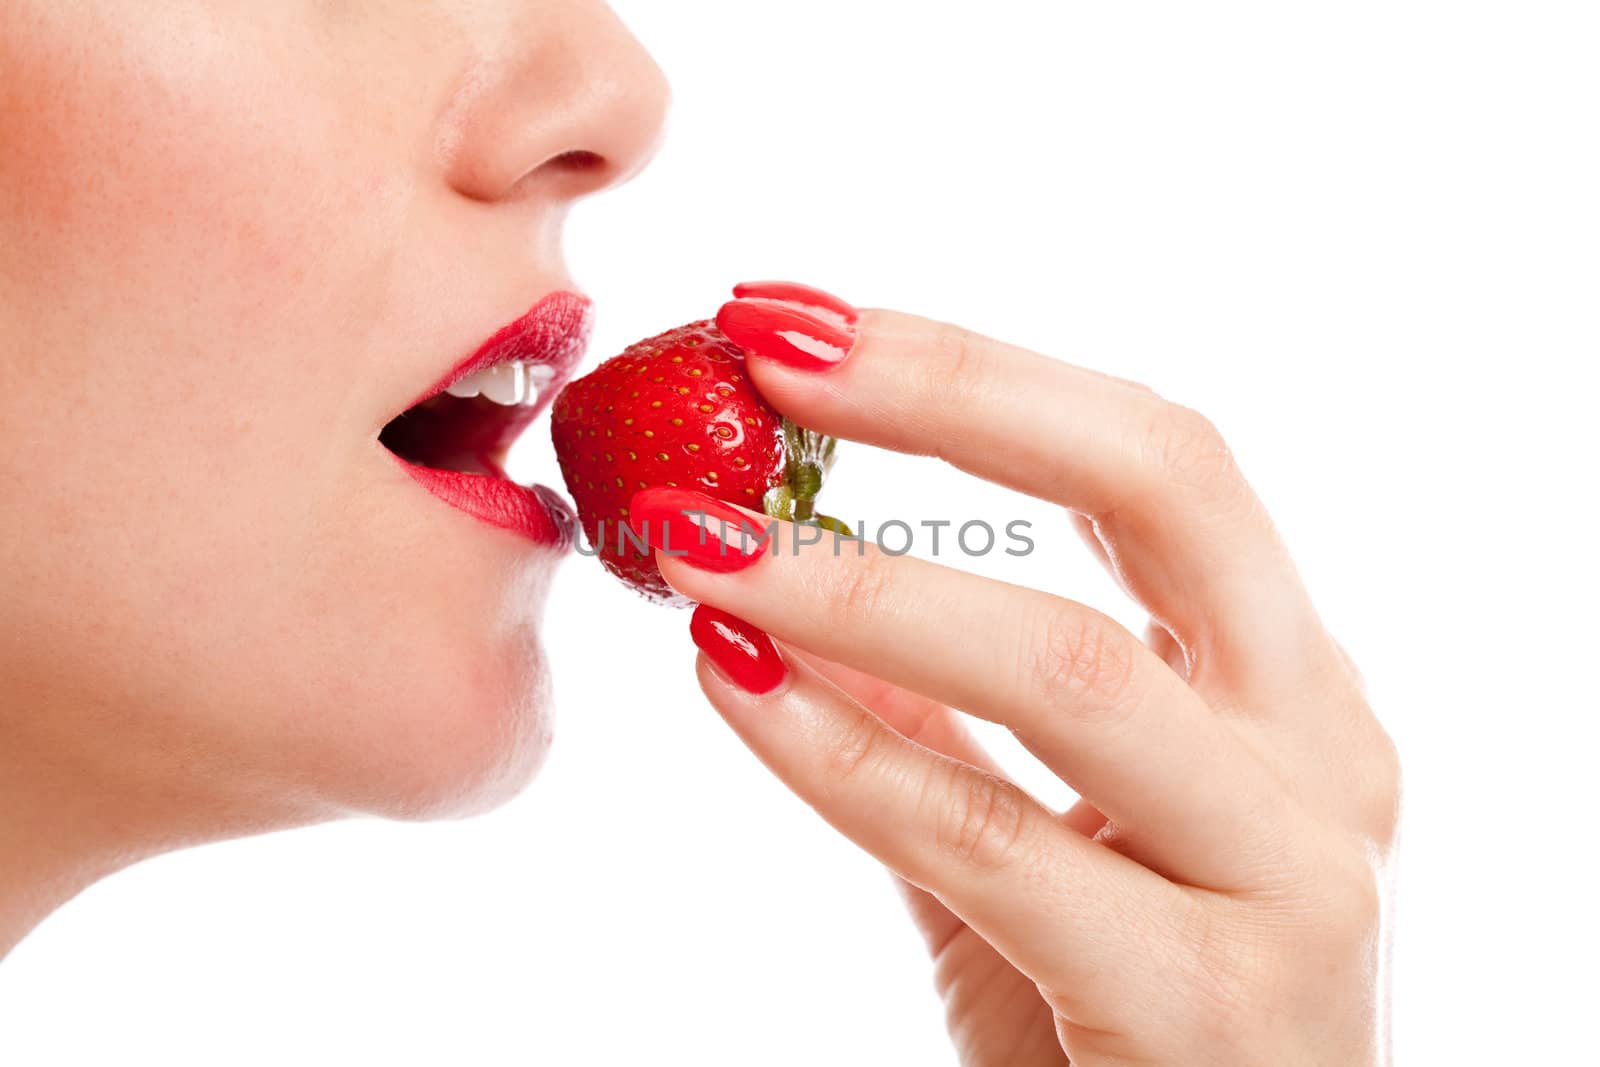 Strawberry bite by Fotosmurf